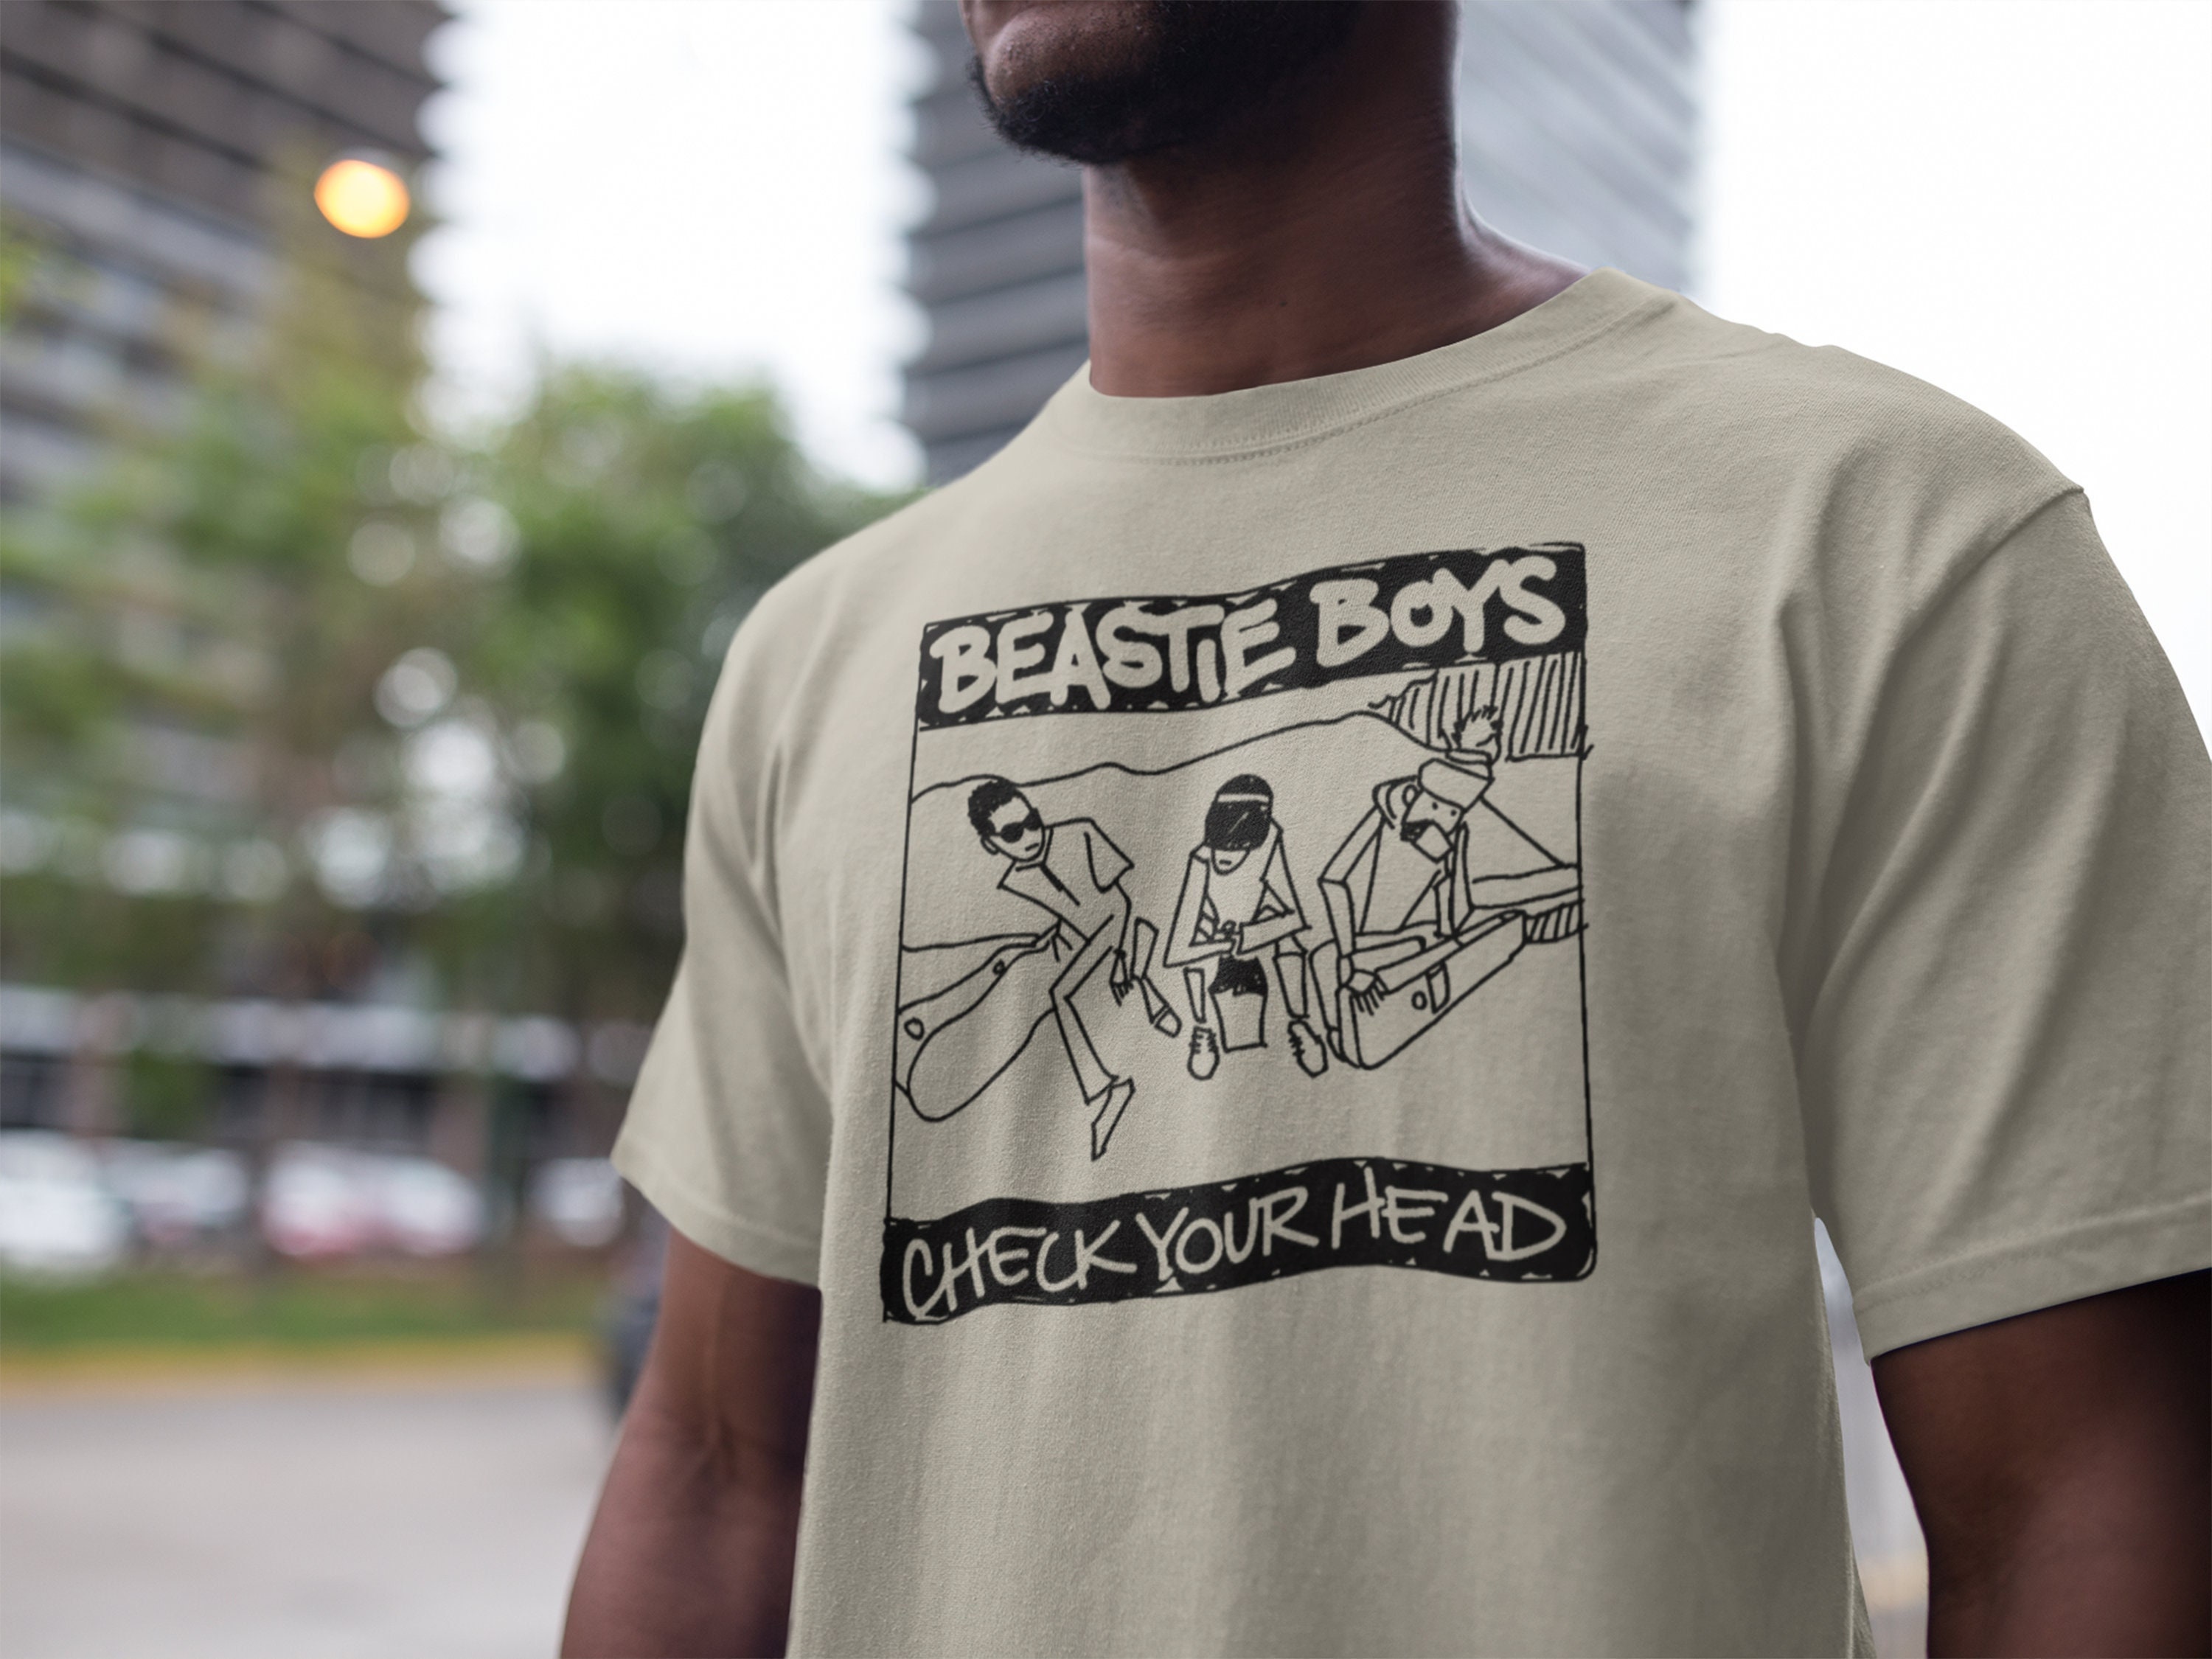 Beastie Boys Check Your Head T-shirt, 90's Music Band Shirt